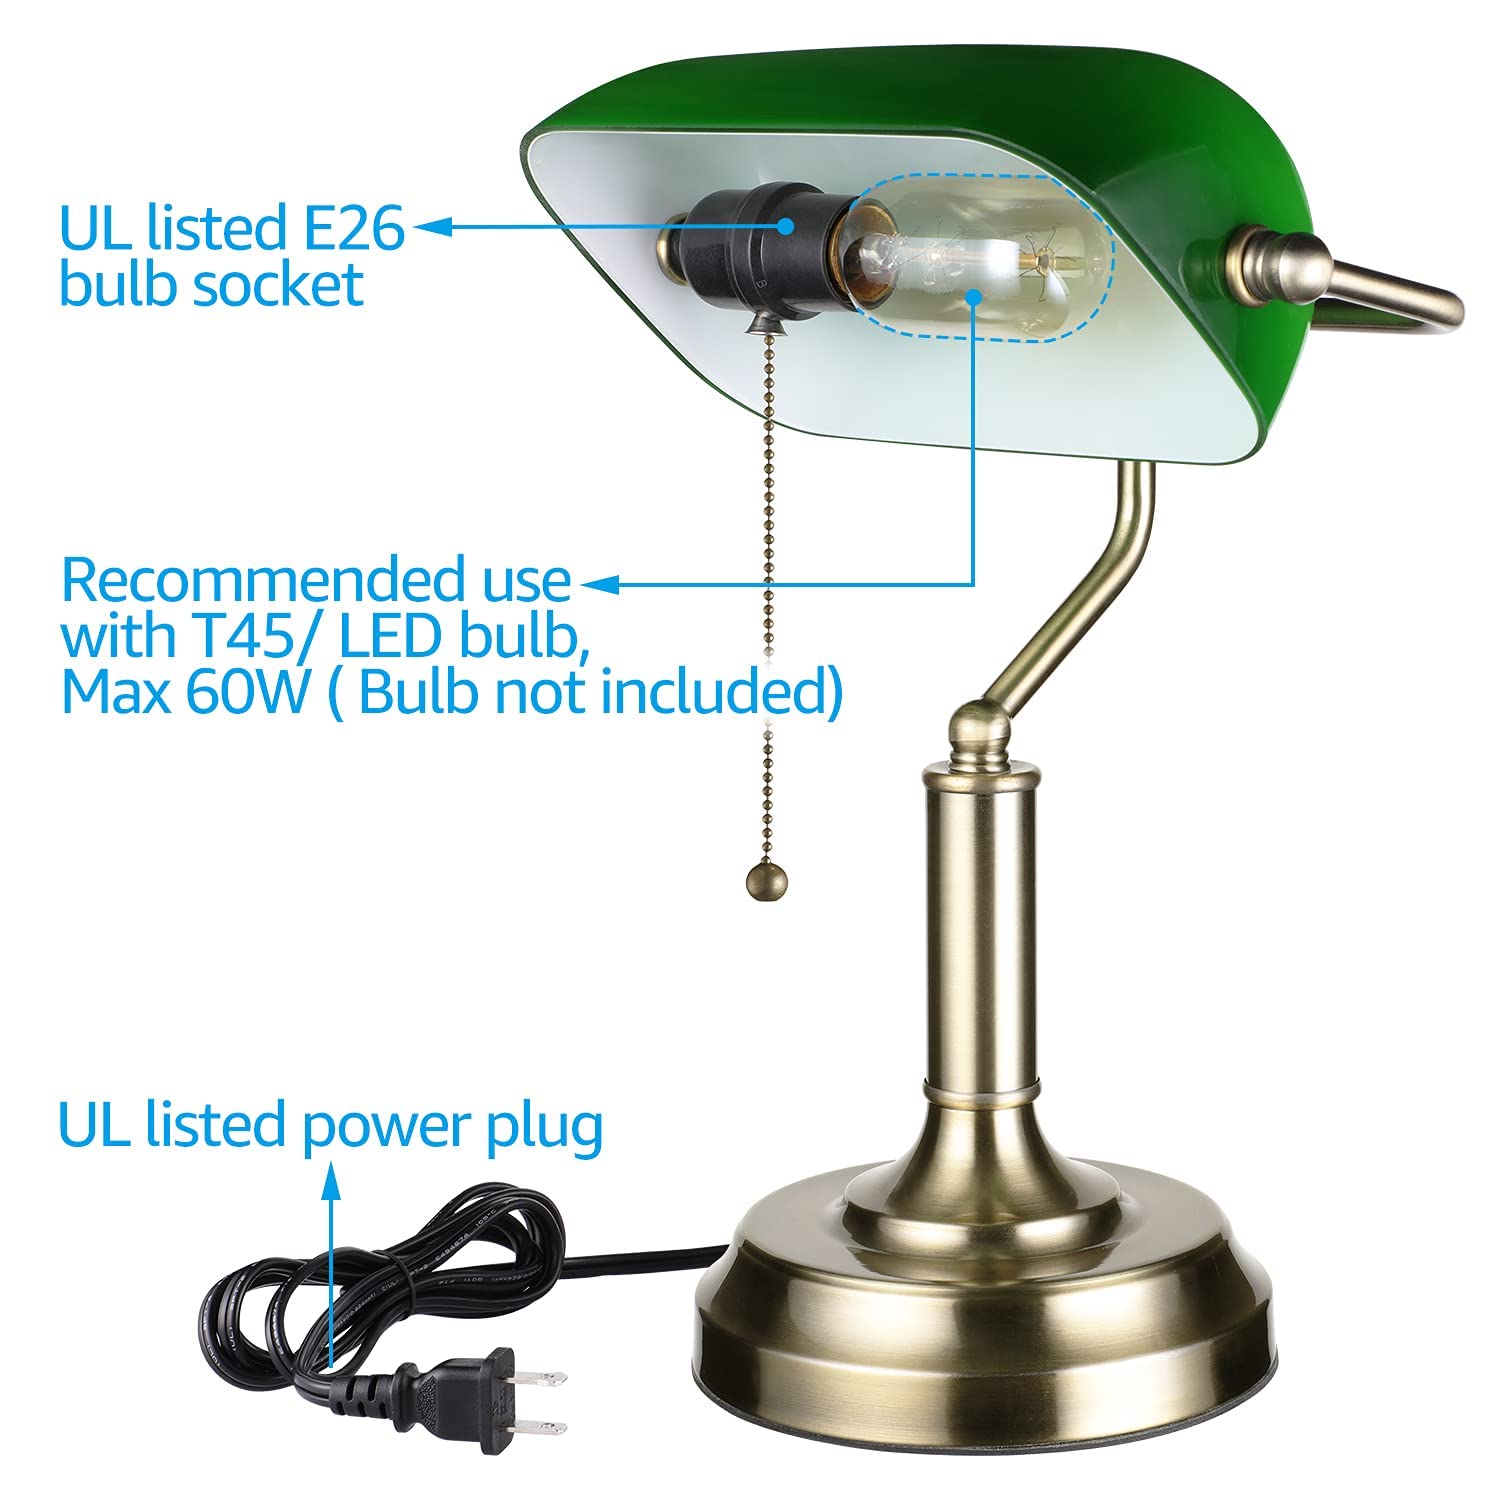 EraEclat Emerald Banker's Lamp - E26 Base